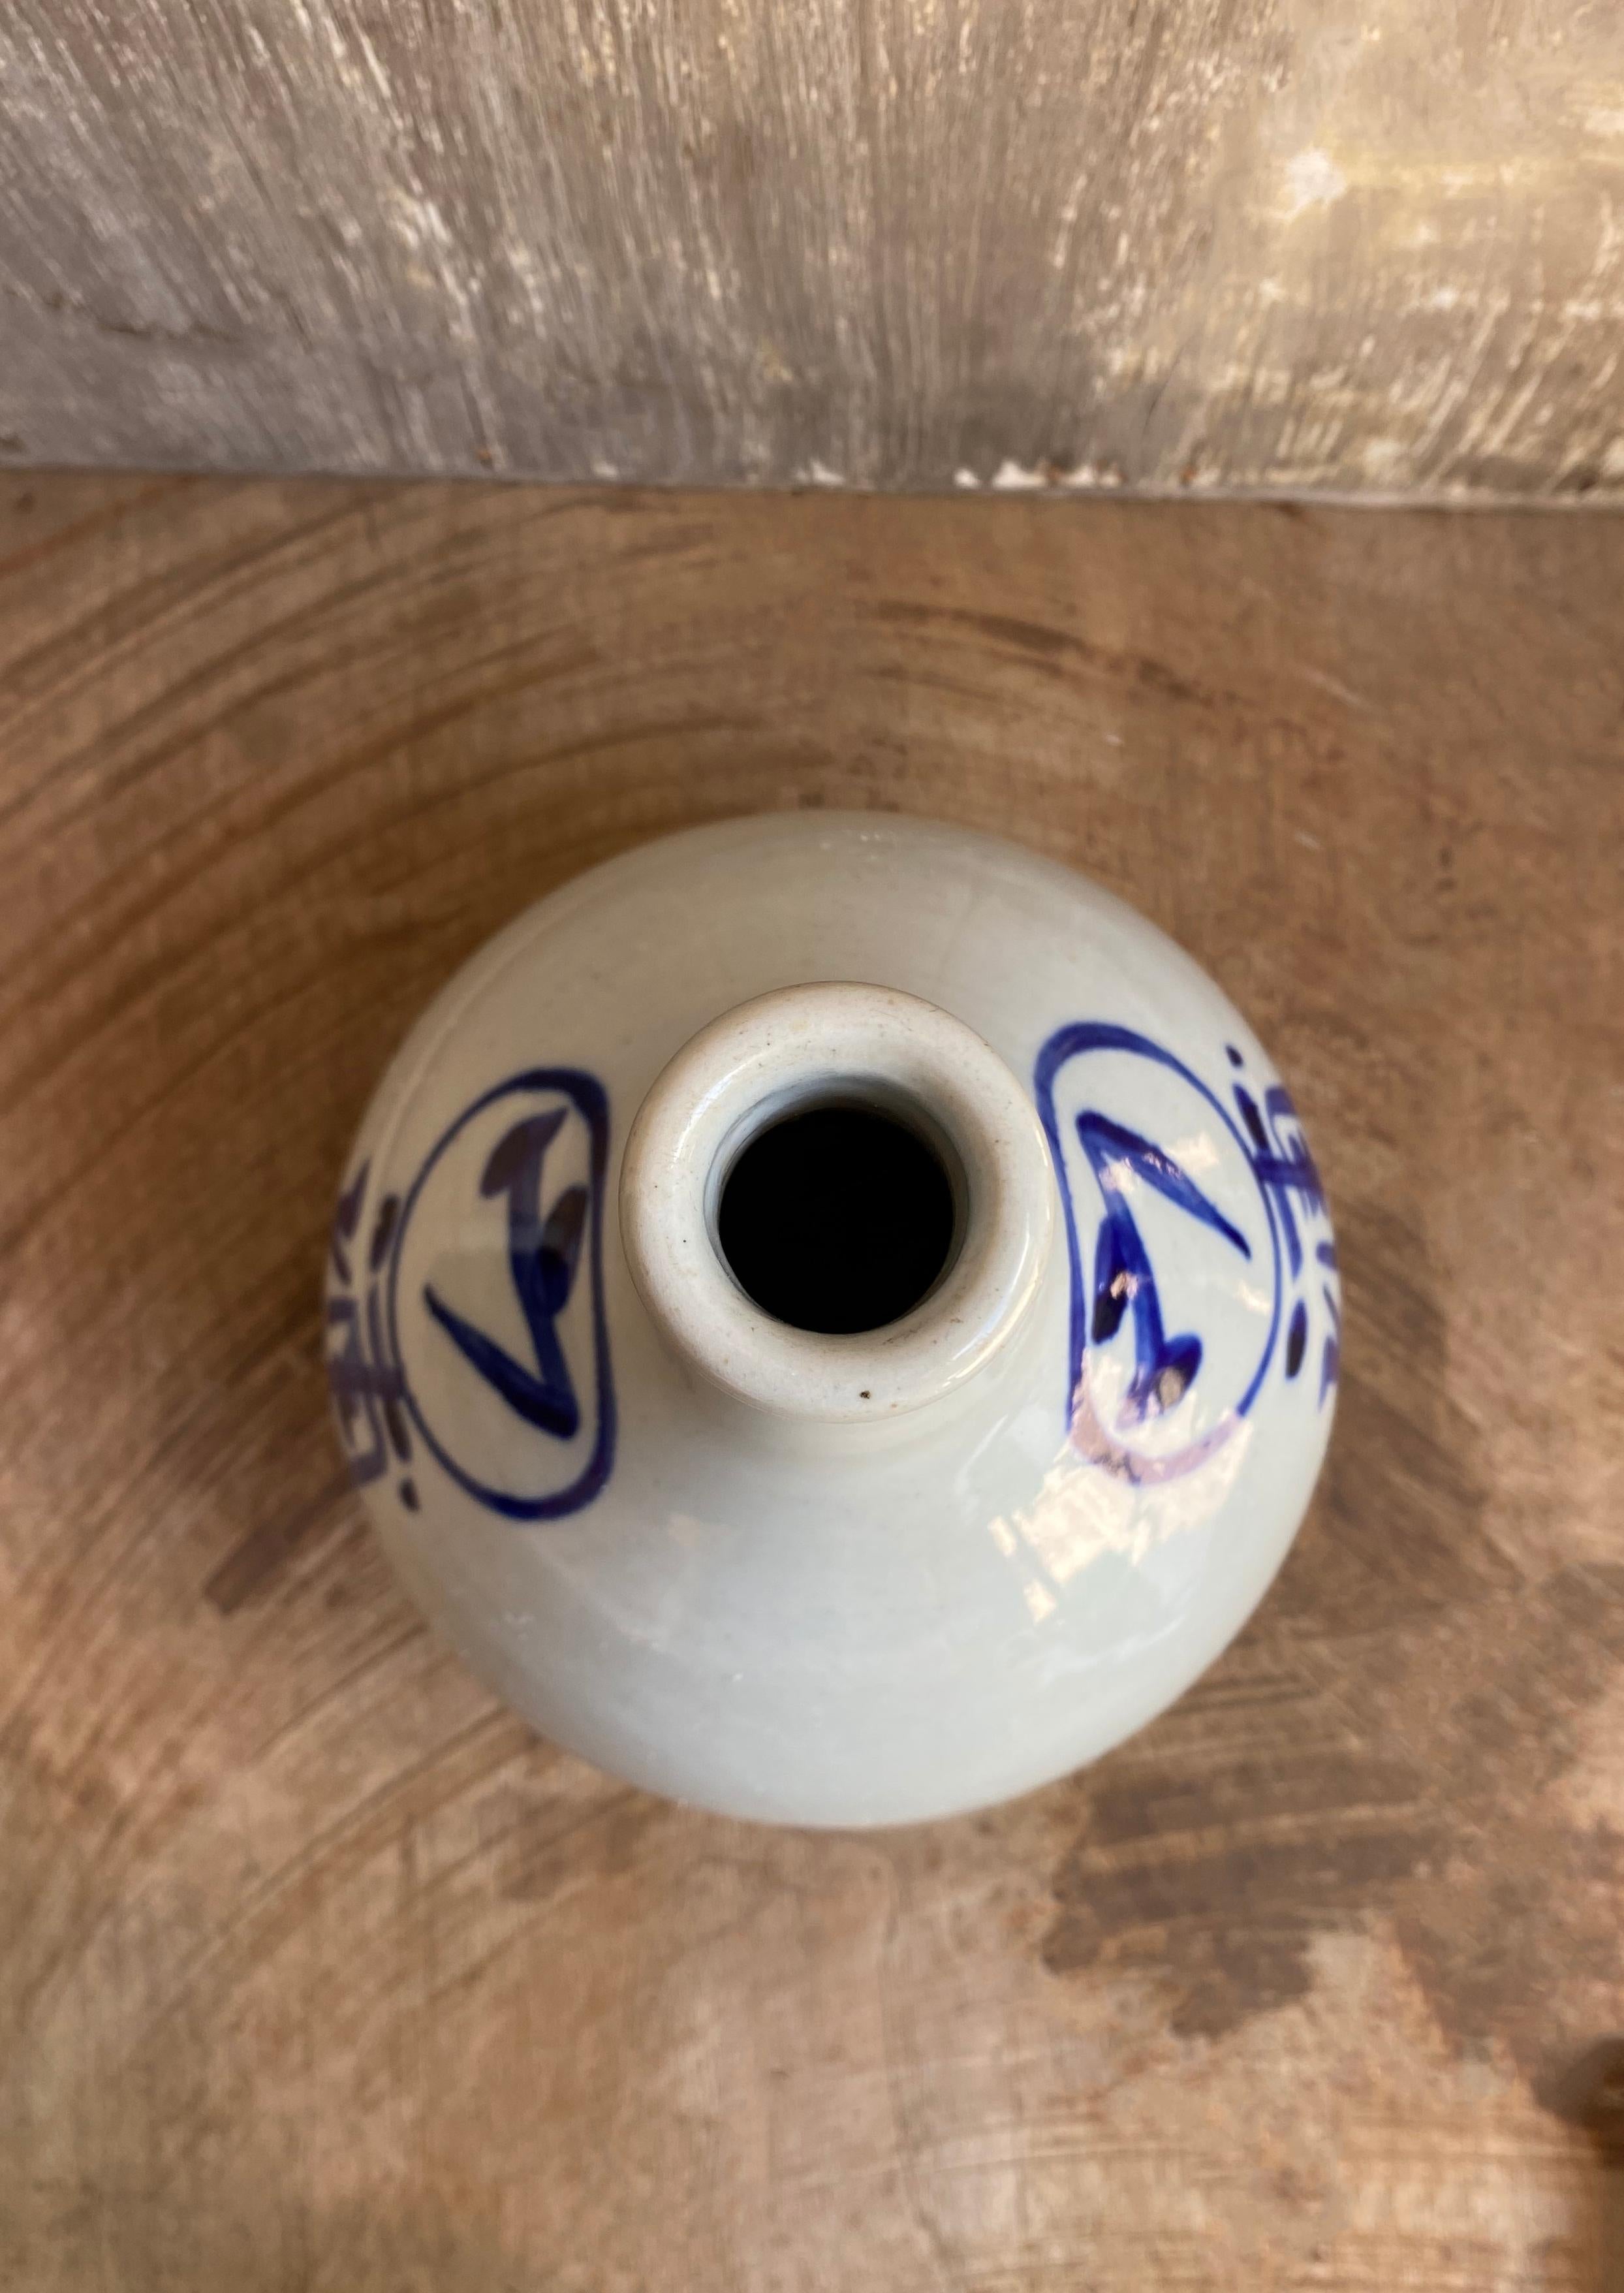 sake ceramic bottle